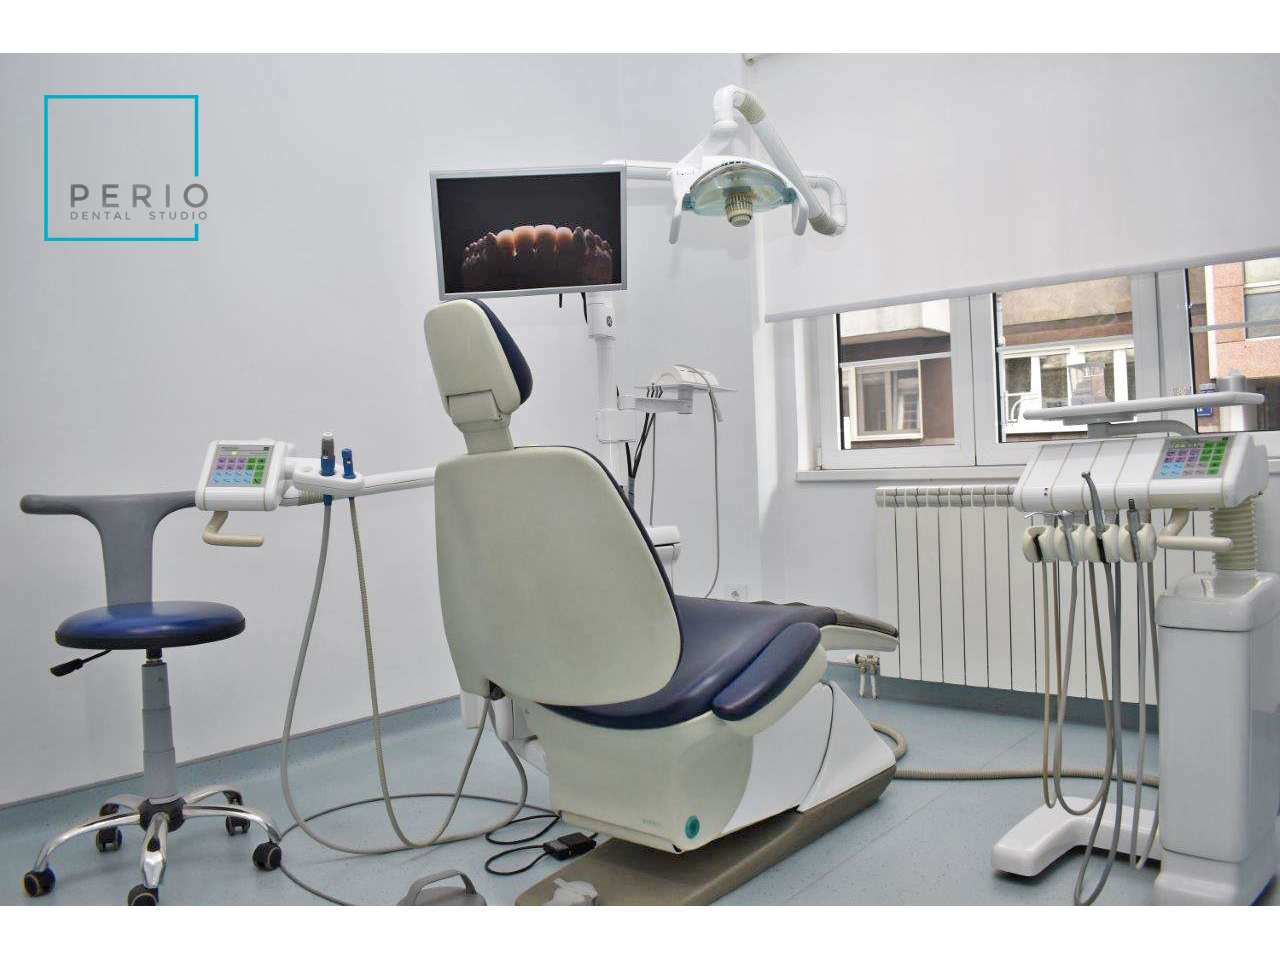 PERIO DENTAL STUDIO Dental surgery Belgrade - Photo 2